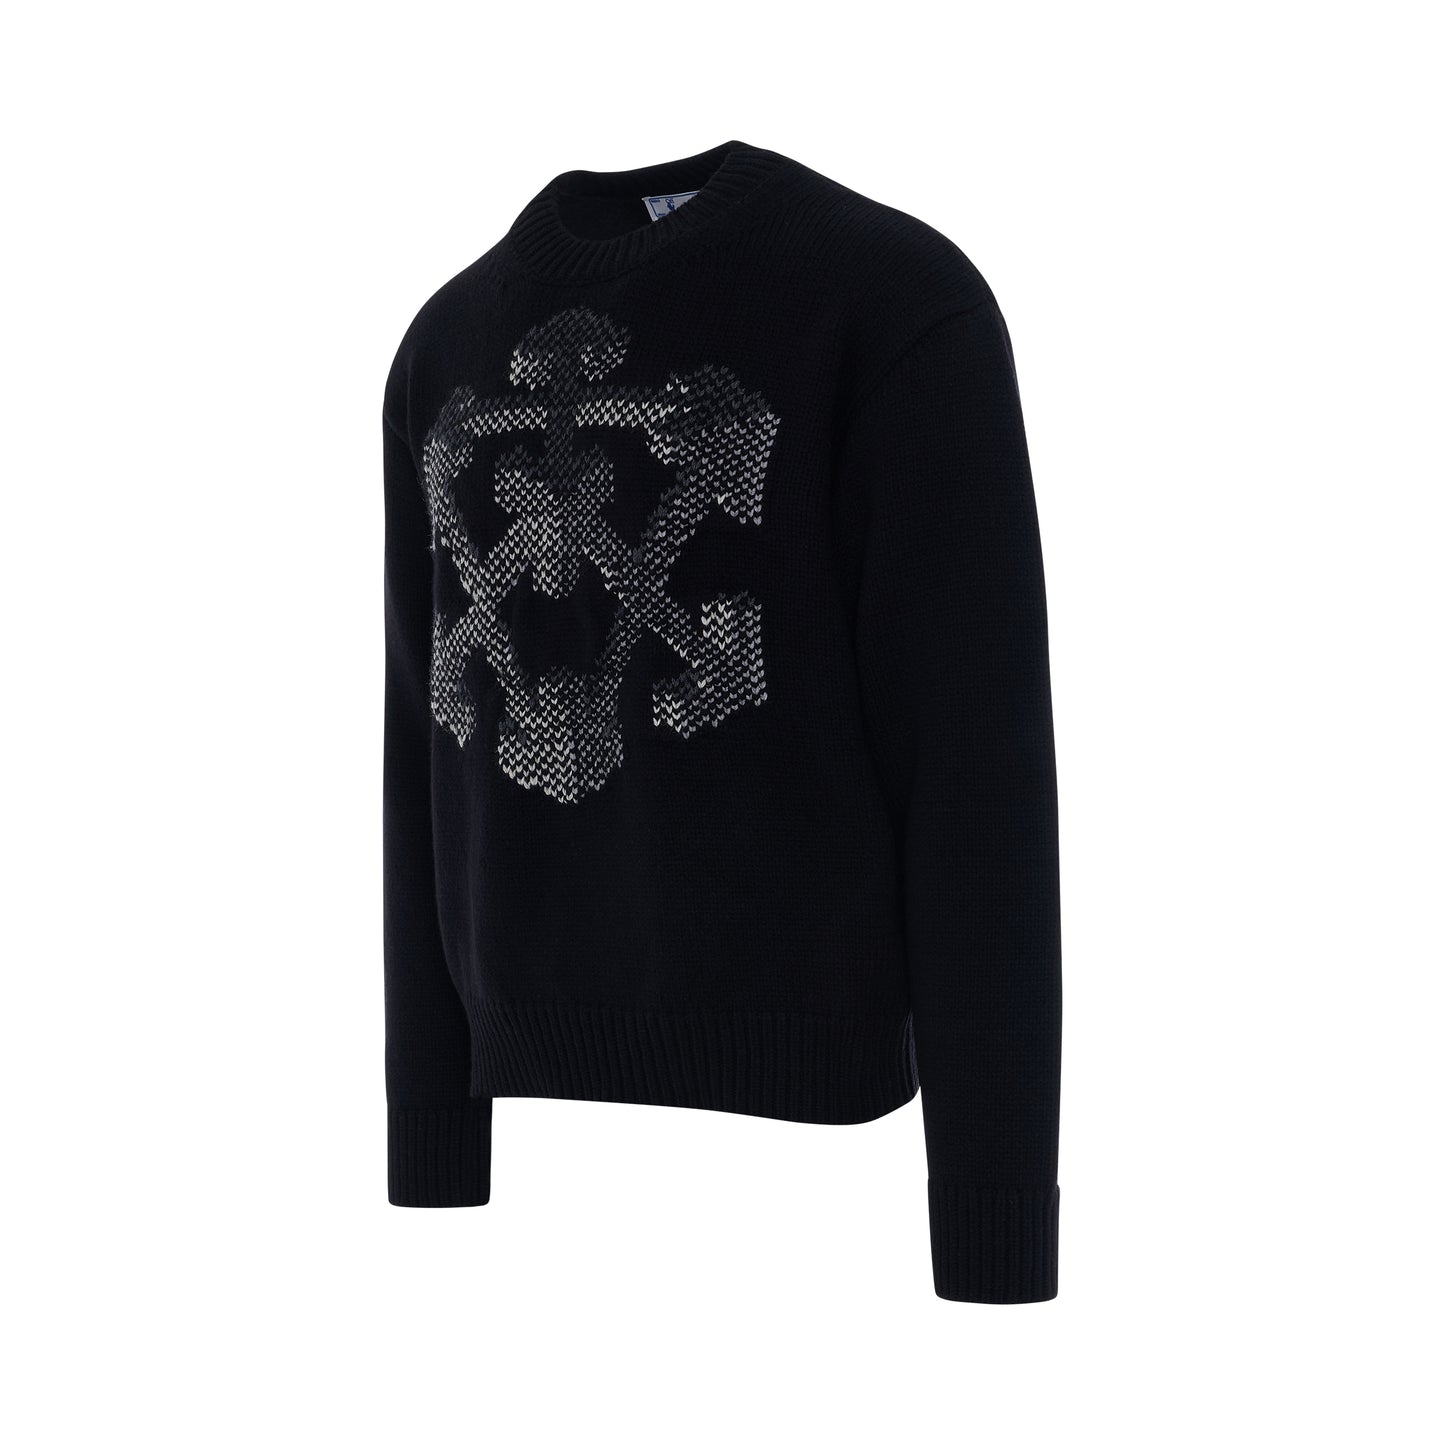 3D Arrow Chunky Knit Sweater in Black/Grey